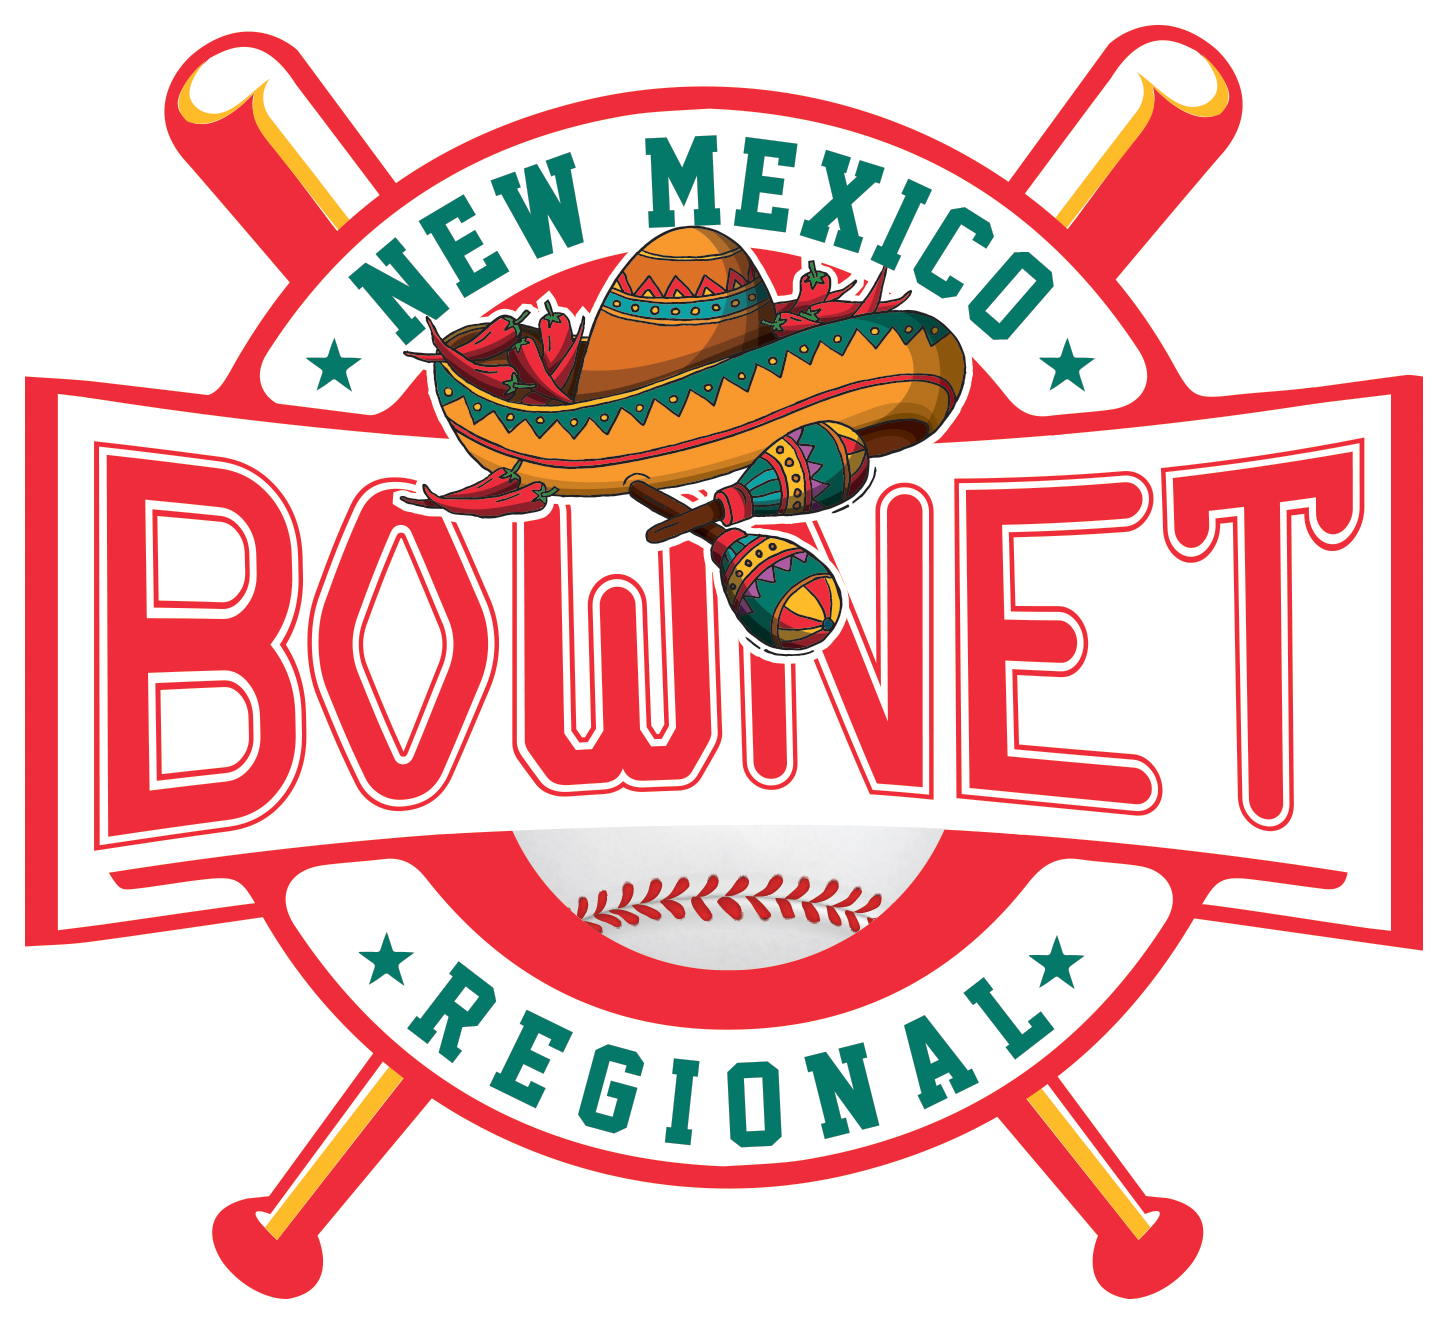 New Mexico Bownet Regional Logo